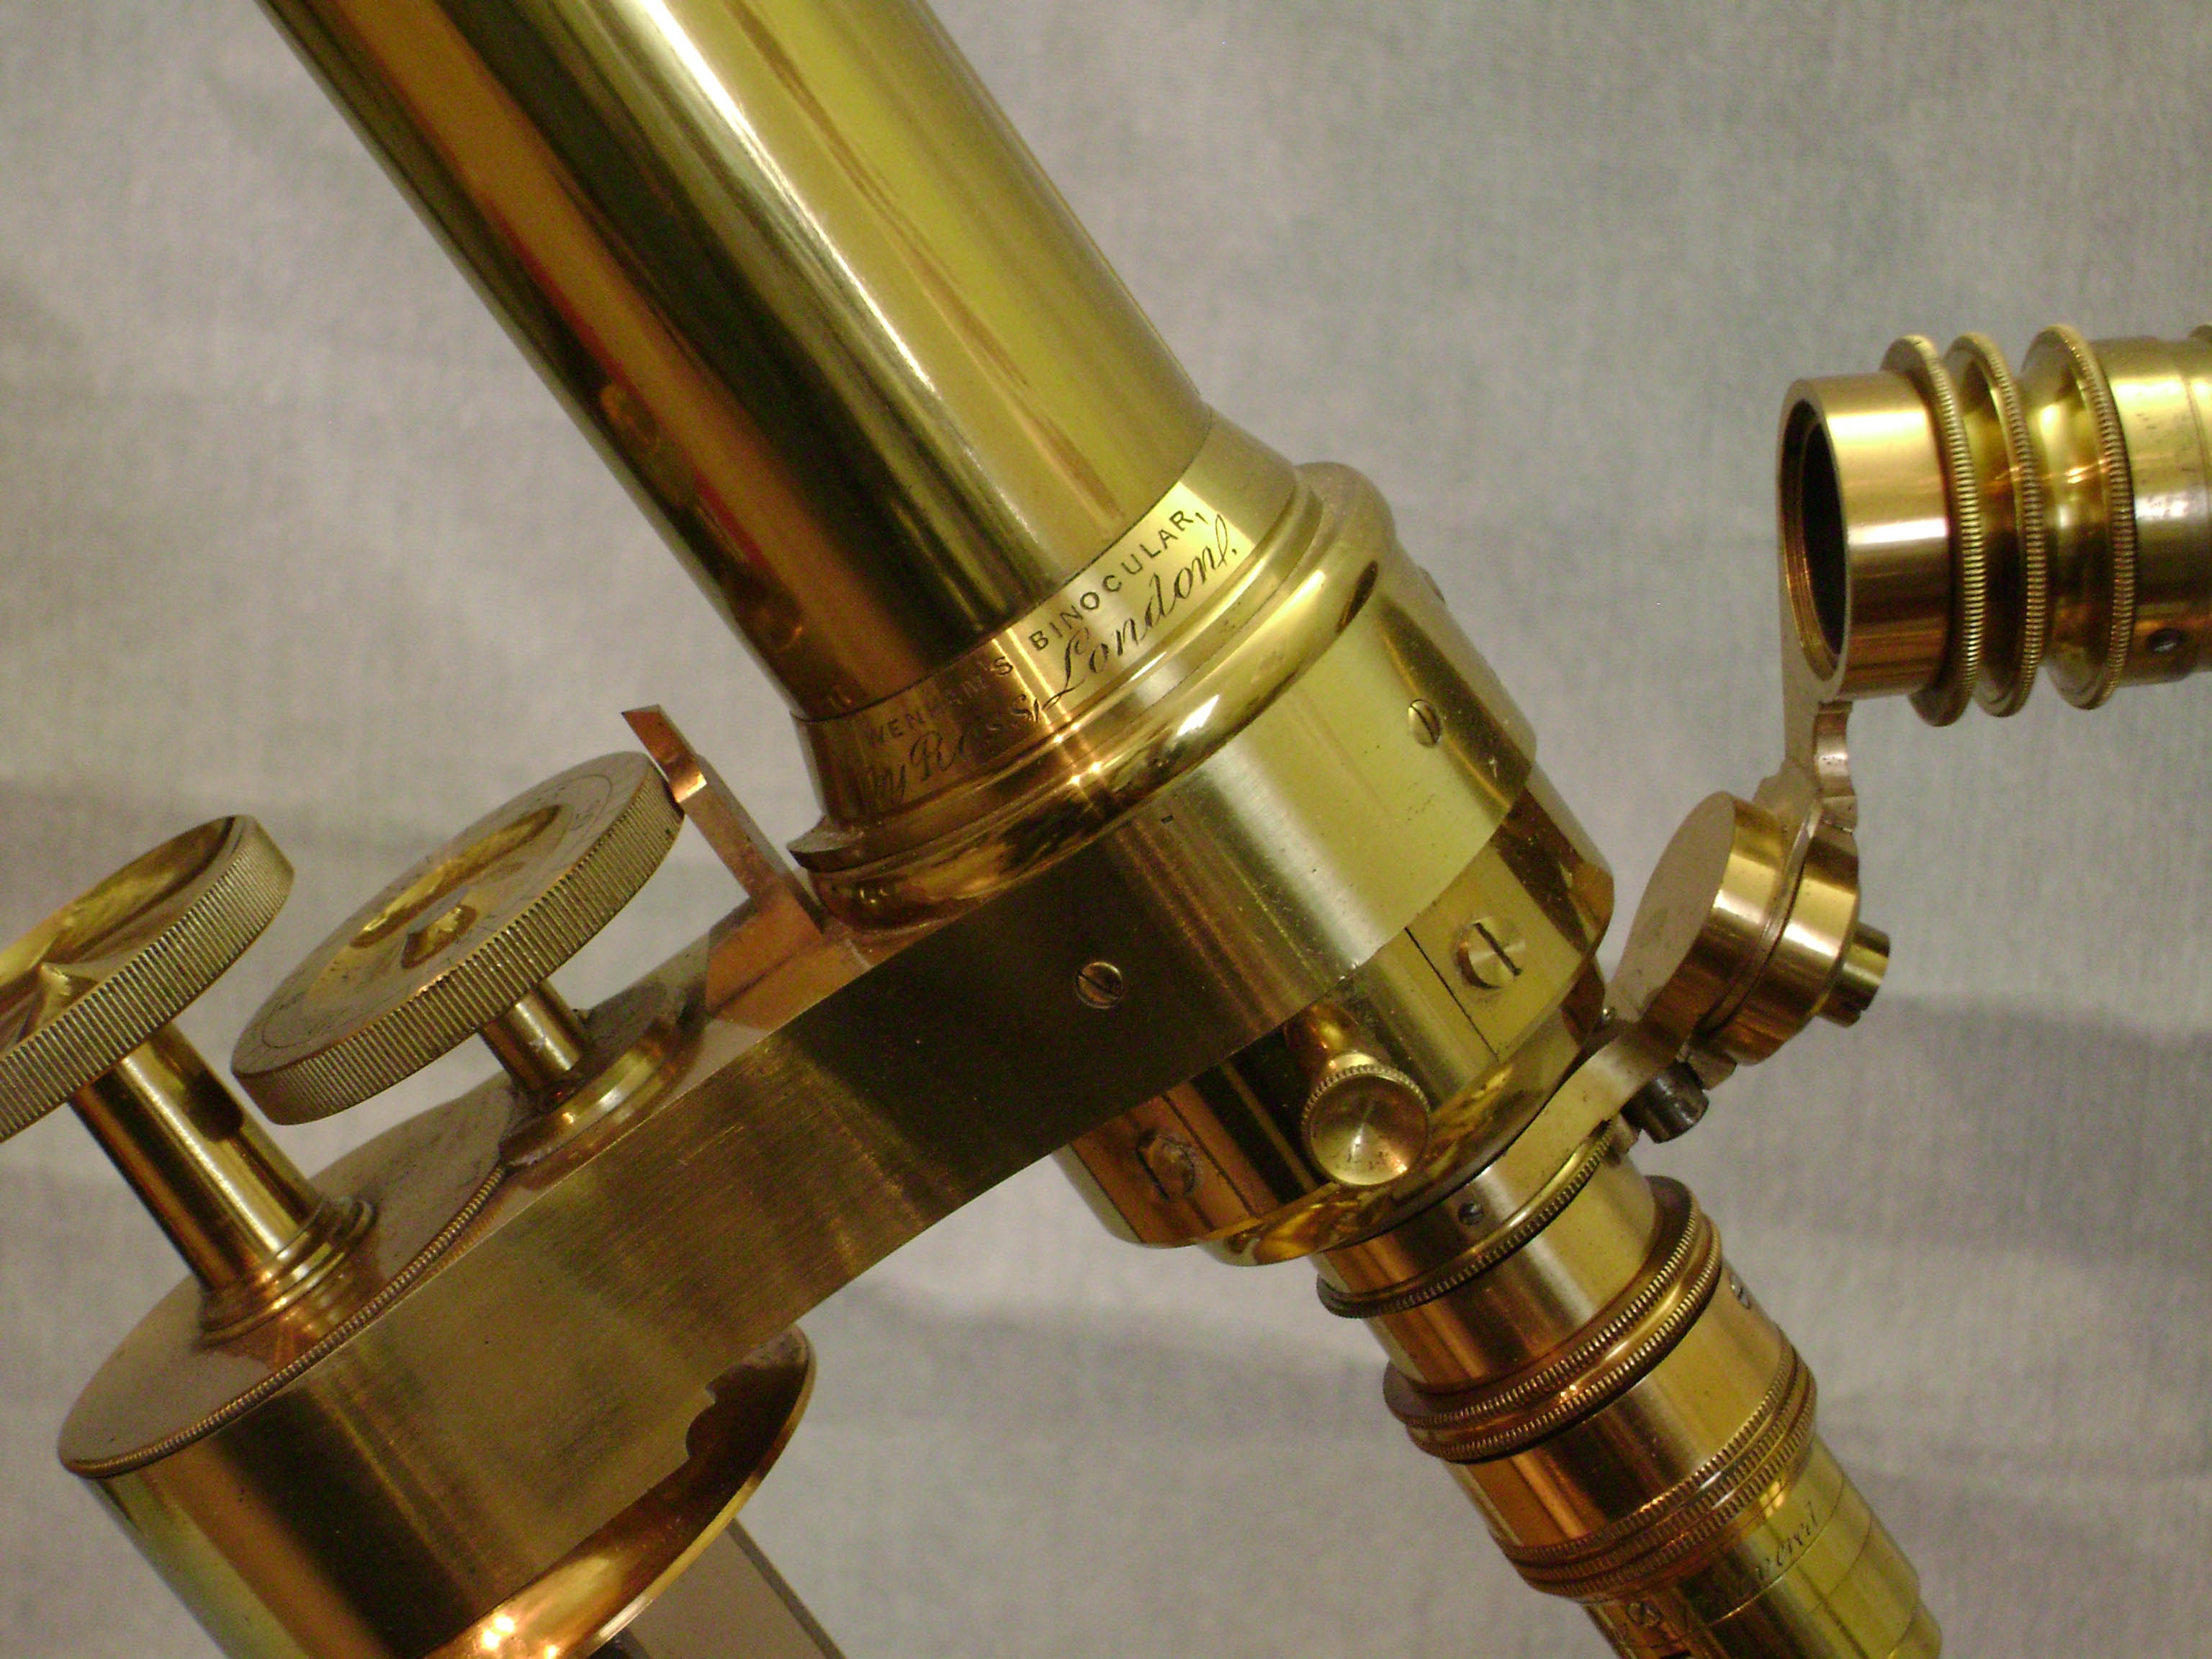 Ross Microscope signature on tube